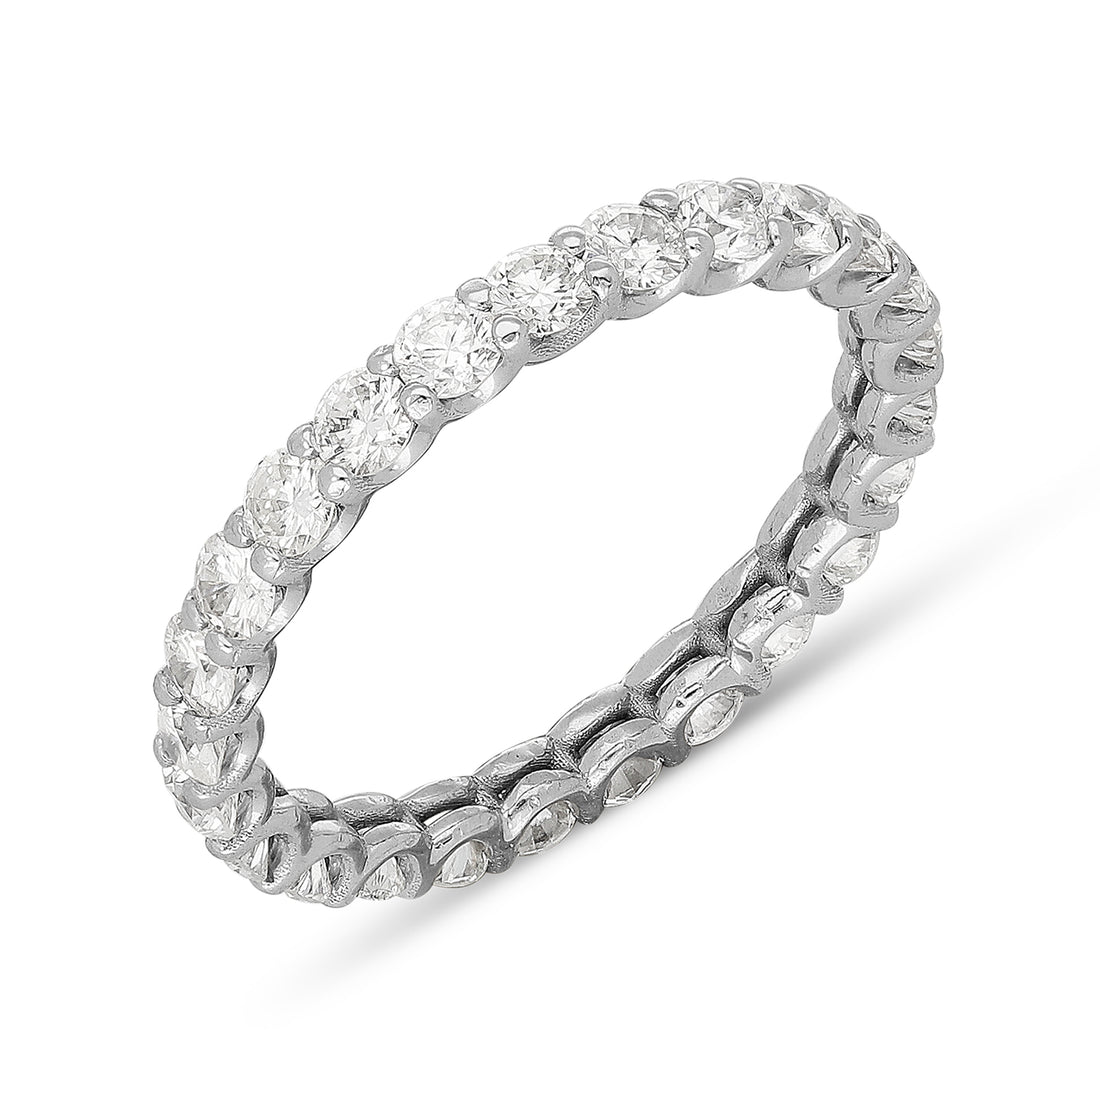 Delicate Eternity Diamond Ring Band - 1.8 Carat